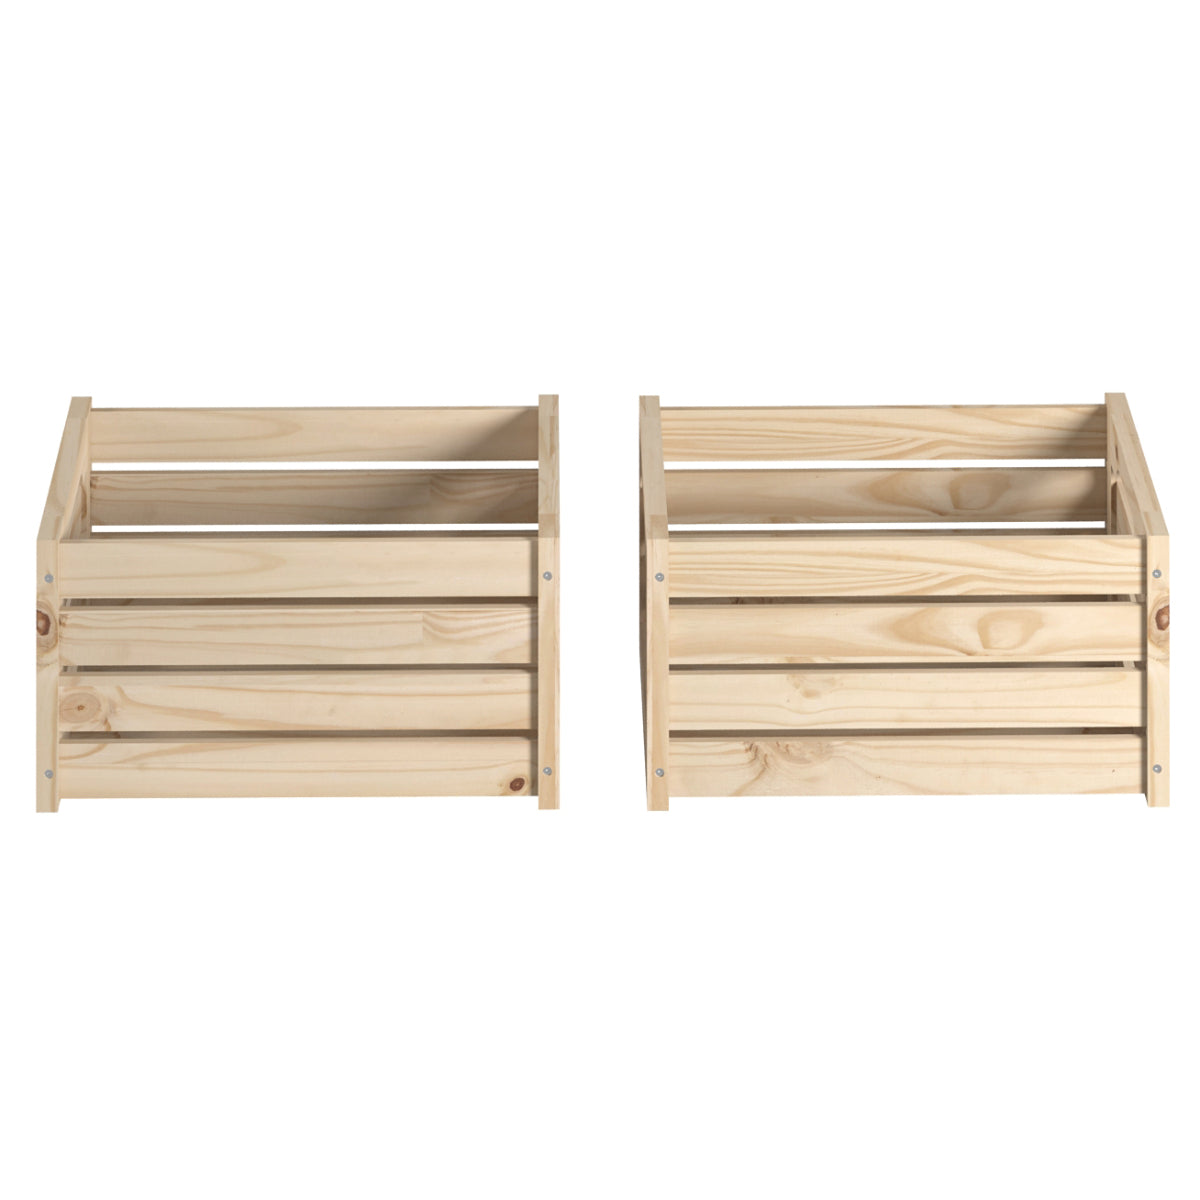 Slatted Crate (Set of 2) | Furniture Dash